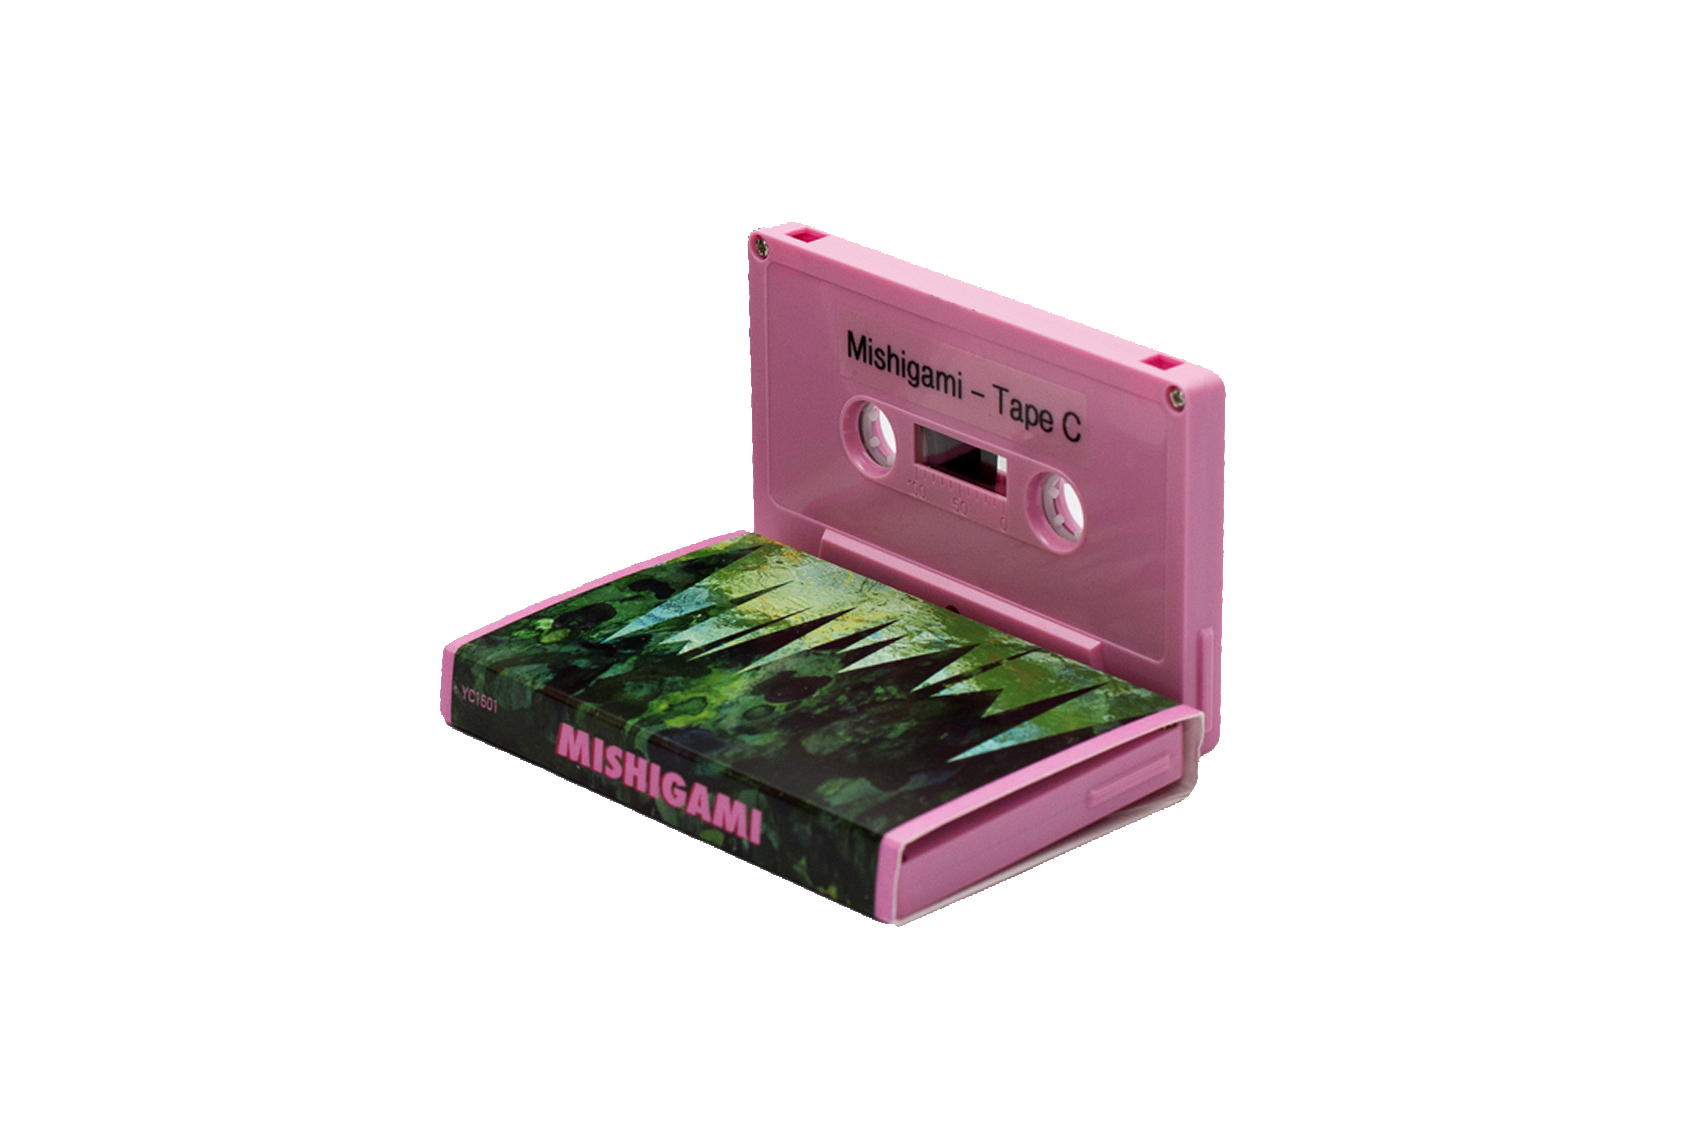 Mishigami - Tape C (Cassette) – $6.00